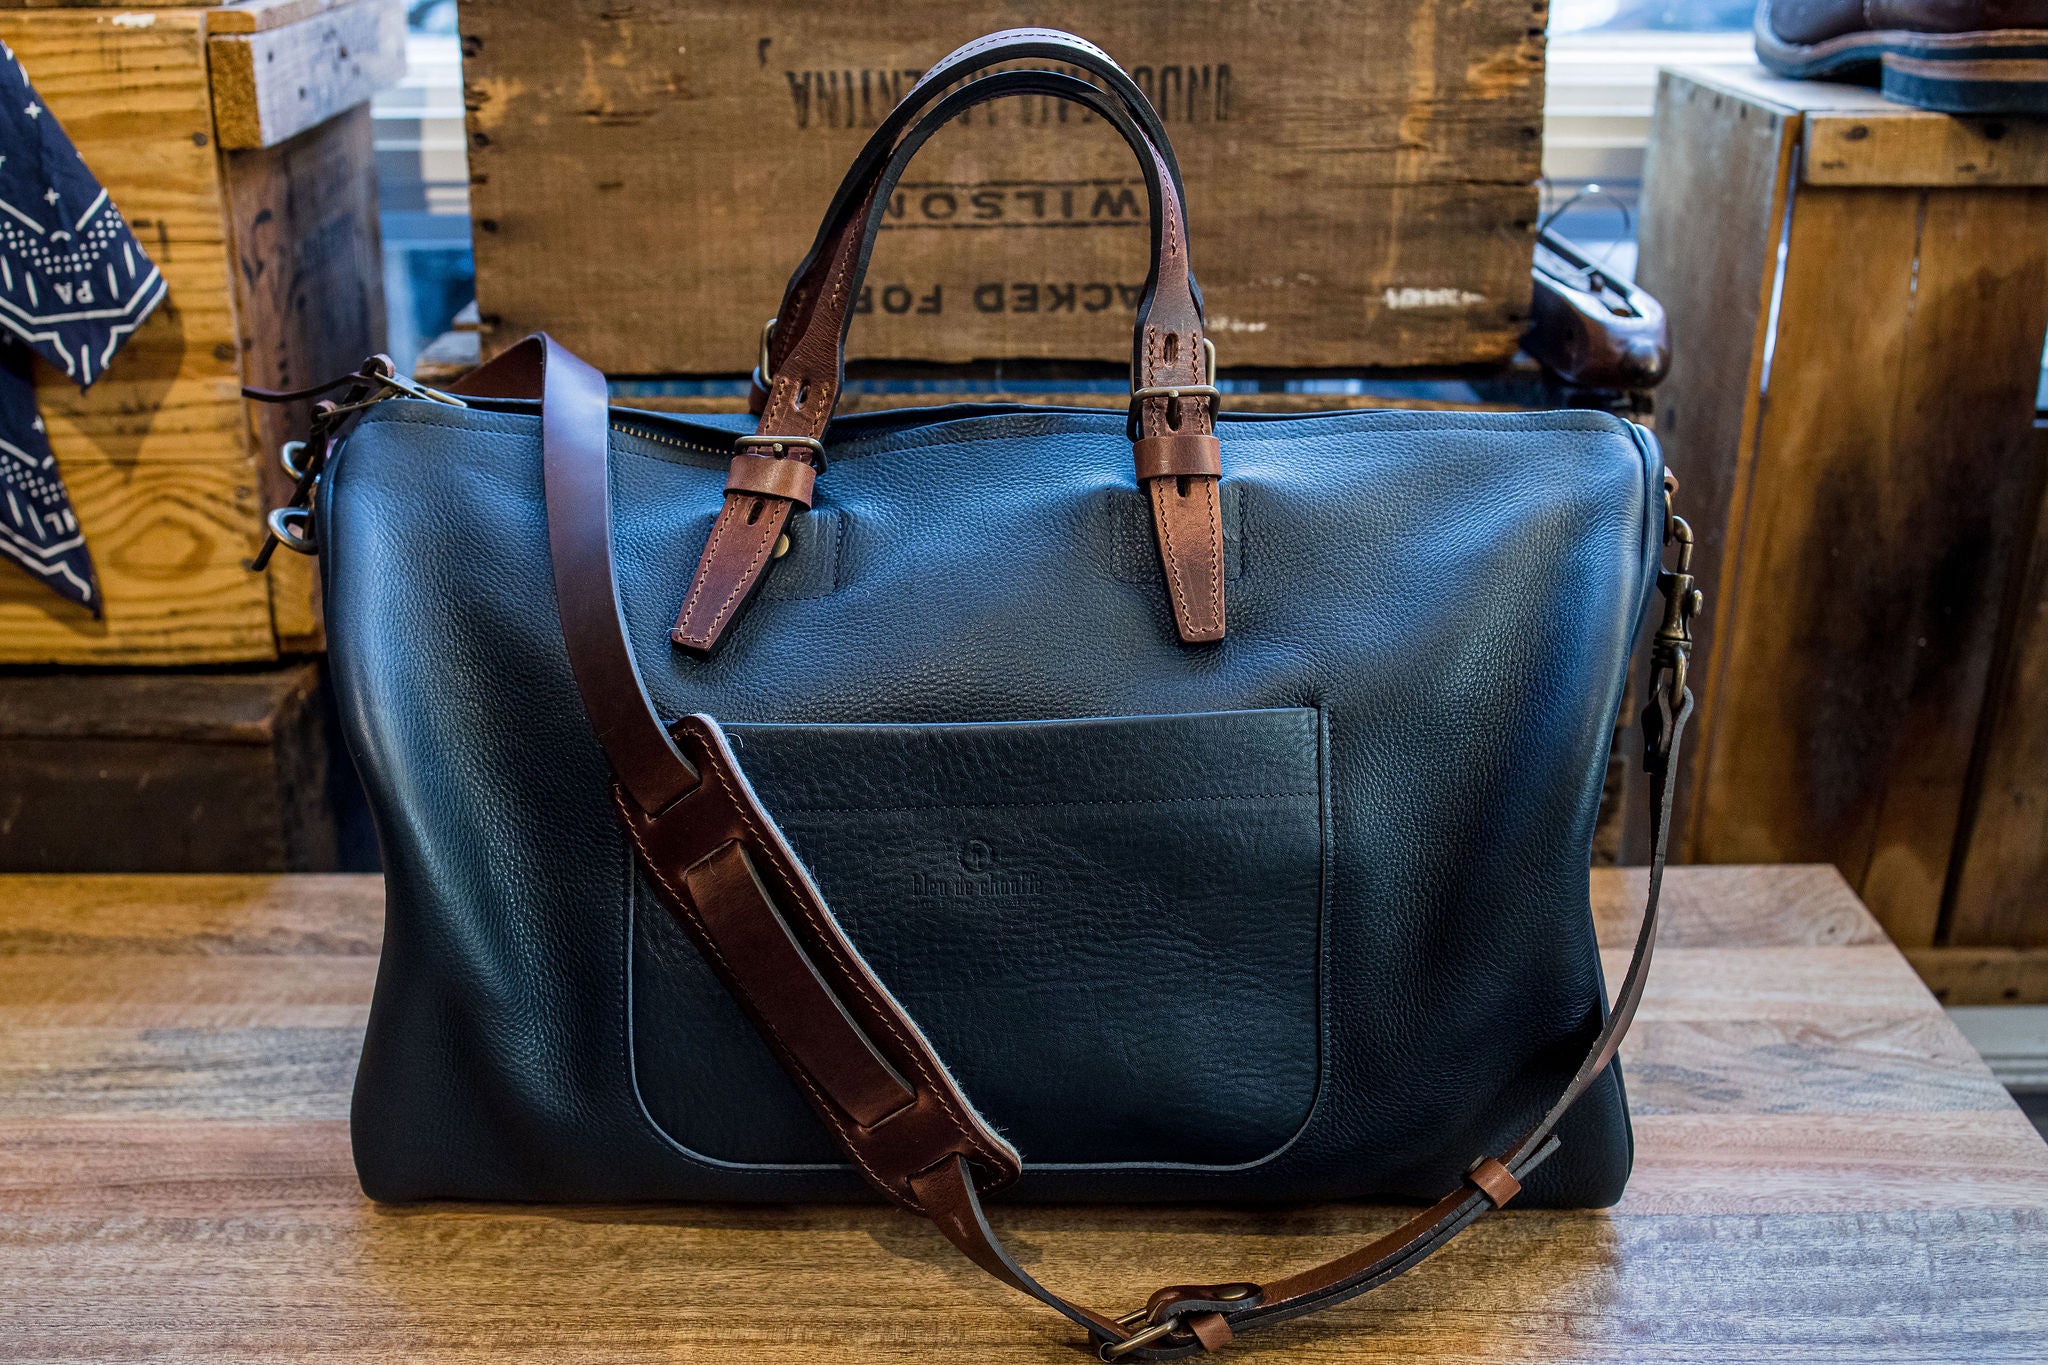 Bleu de Chauffe ZEPPO Business Bag Is A Modern Take On The Classic